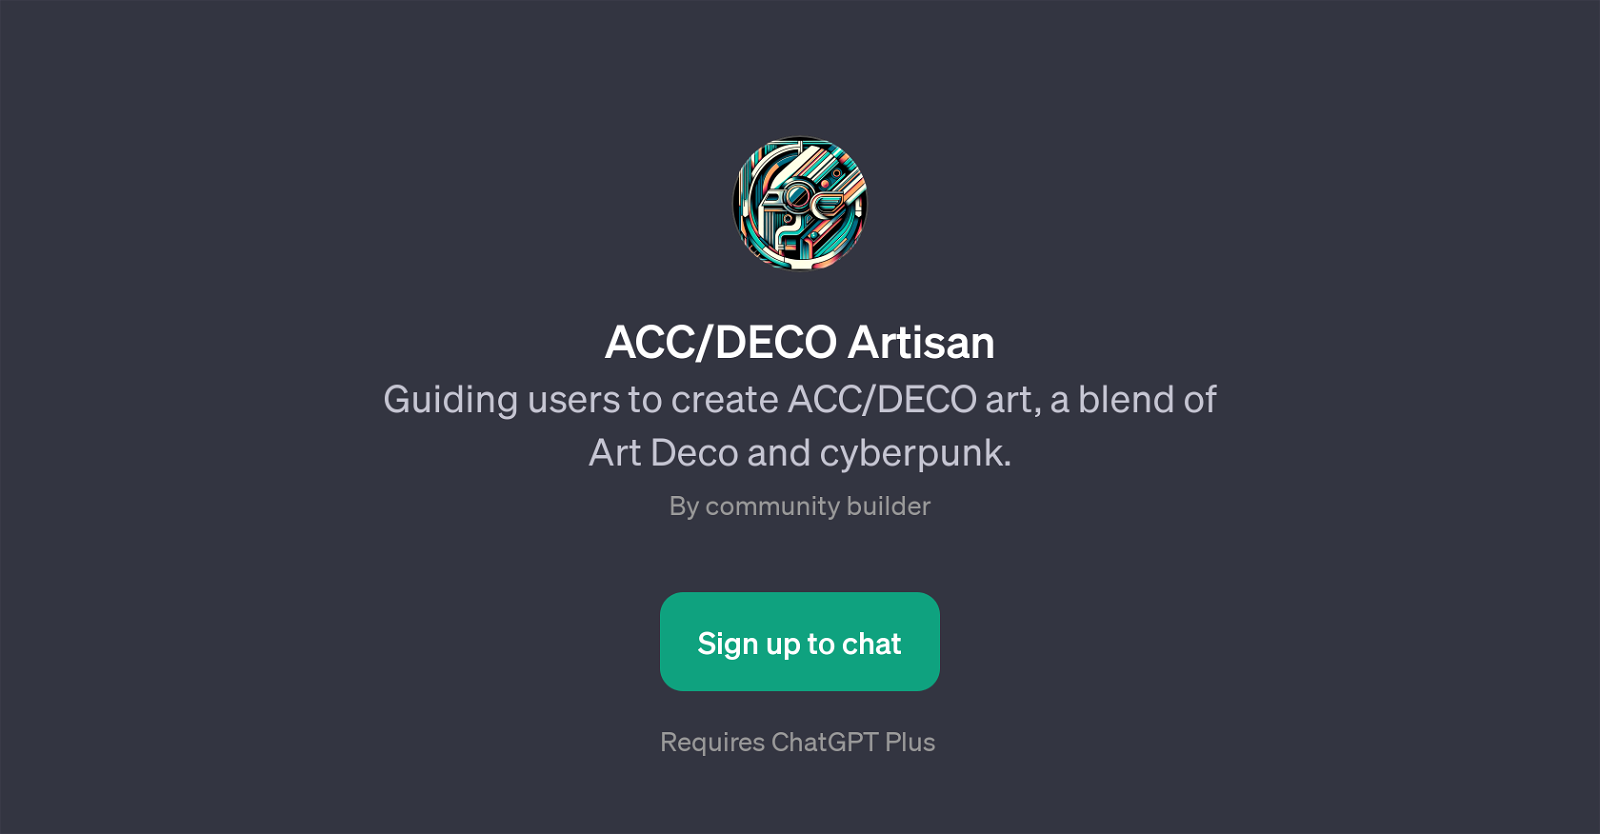 ACC/DECO Artisan website